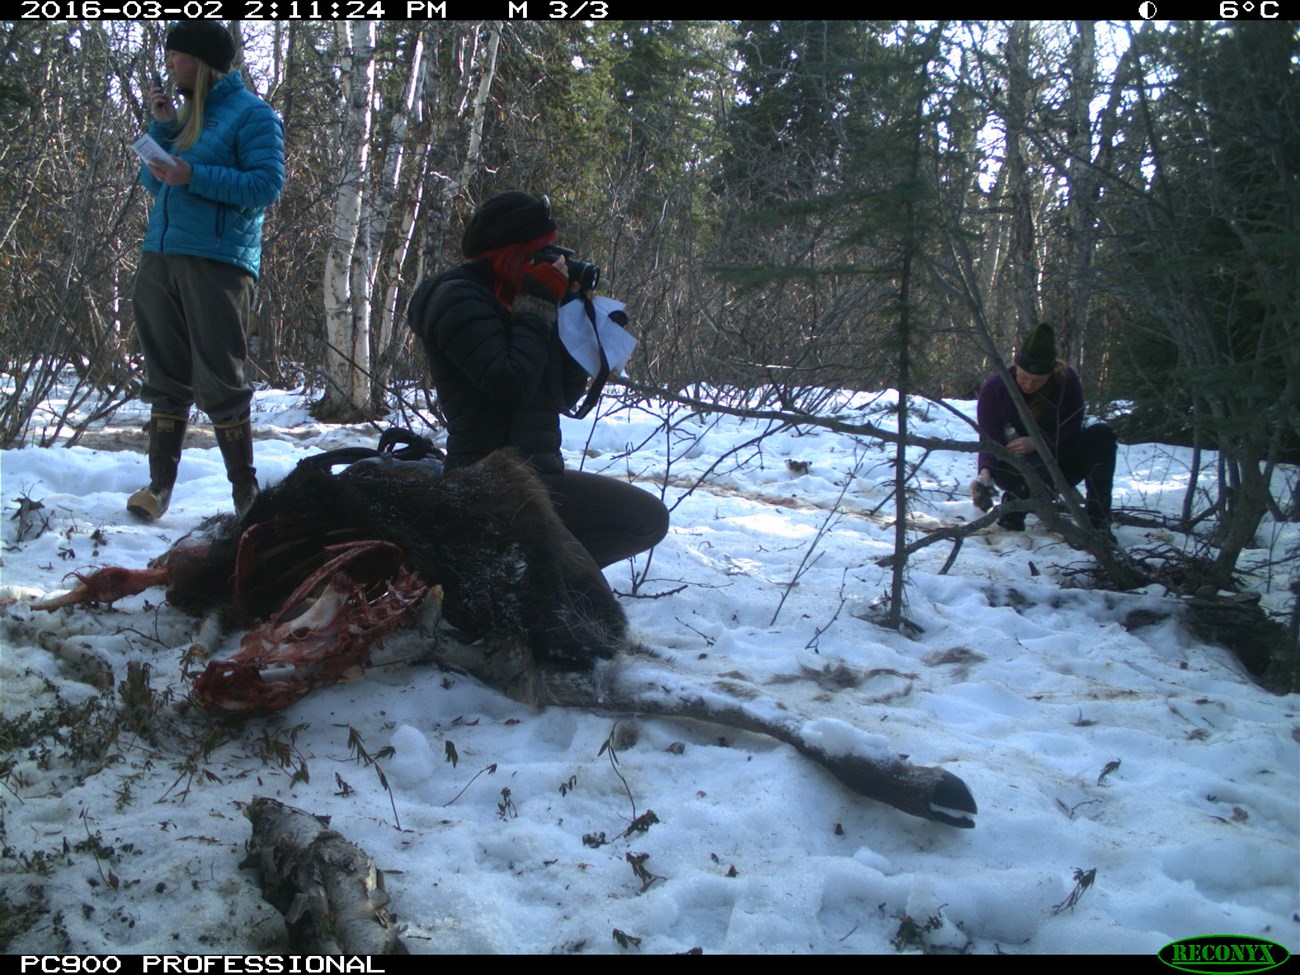 three women near a moose carcass in a snowy field